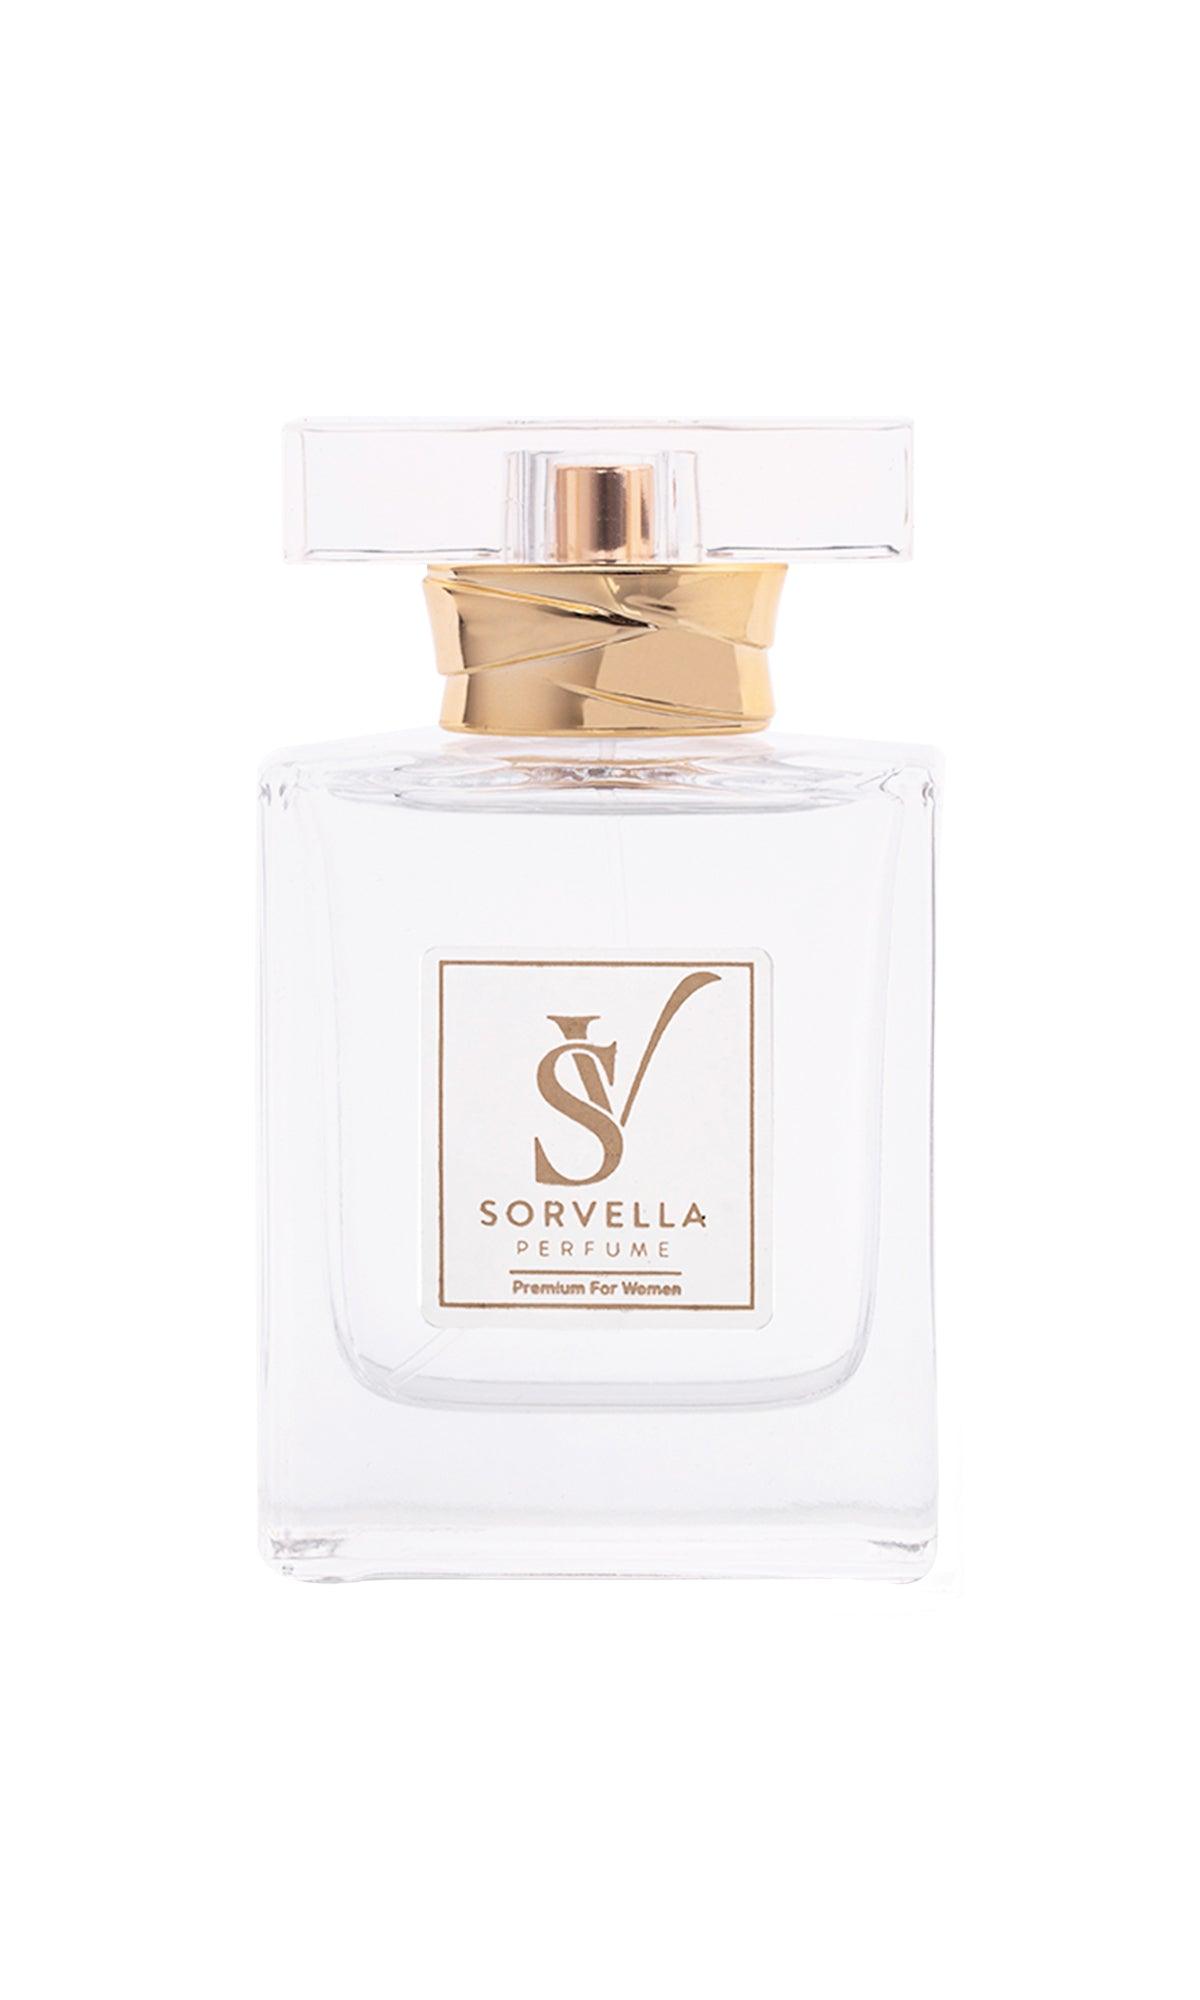 JSM - Perfumy damskie Premium 50 ml - sorvellaperfume.pl